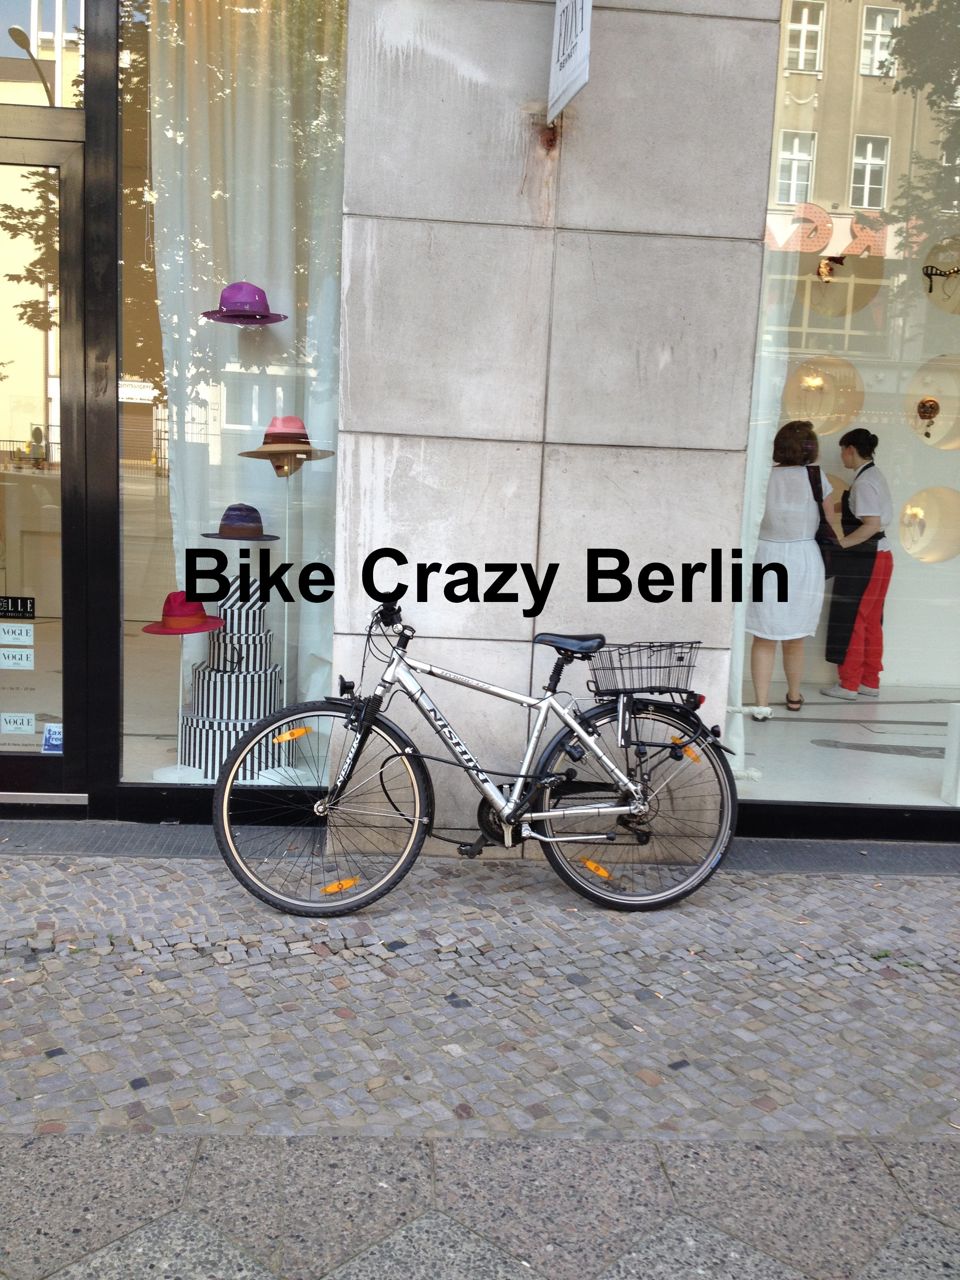 You are currently viewing <!--:en--> “Bike Crazy Berlin” Shopping @ Little John Bikes in Berlin”<!--:-->